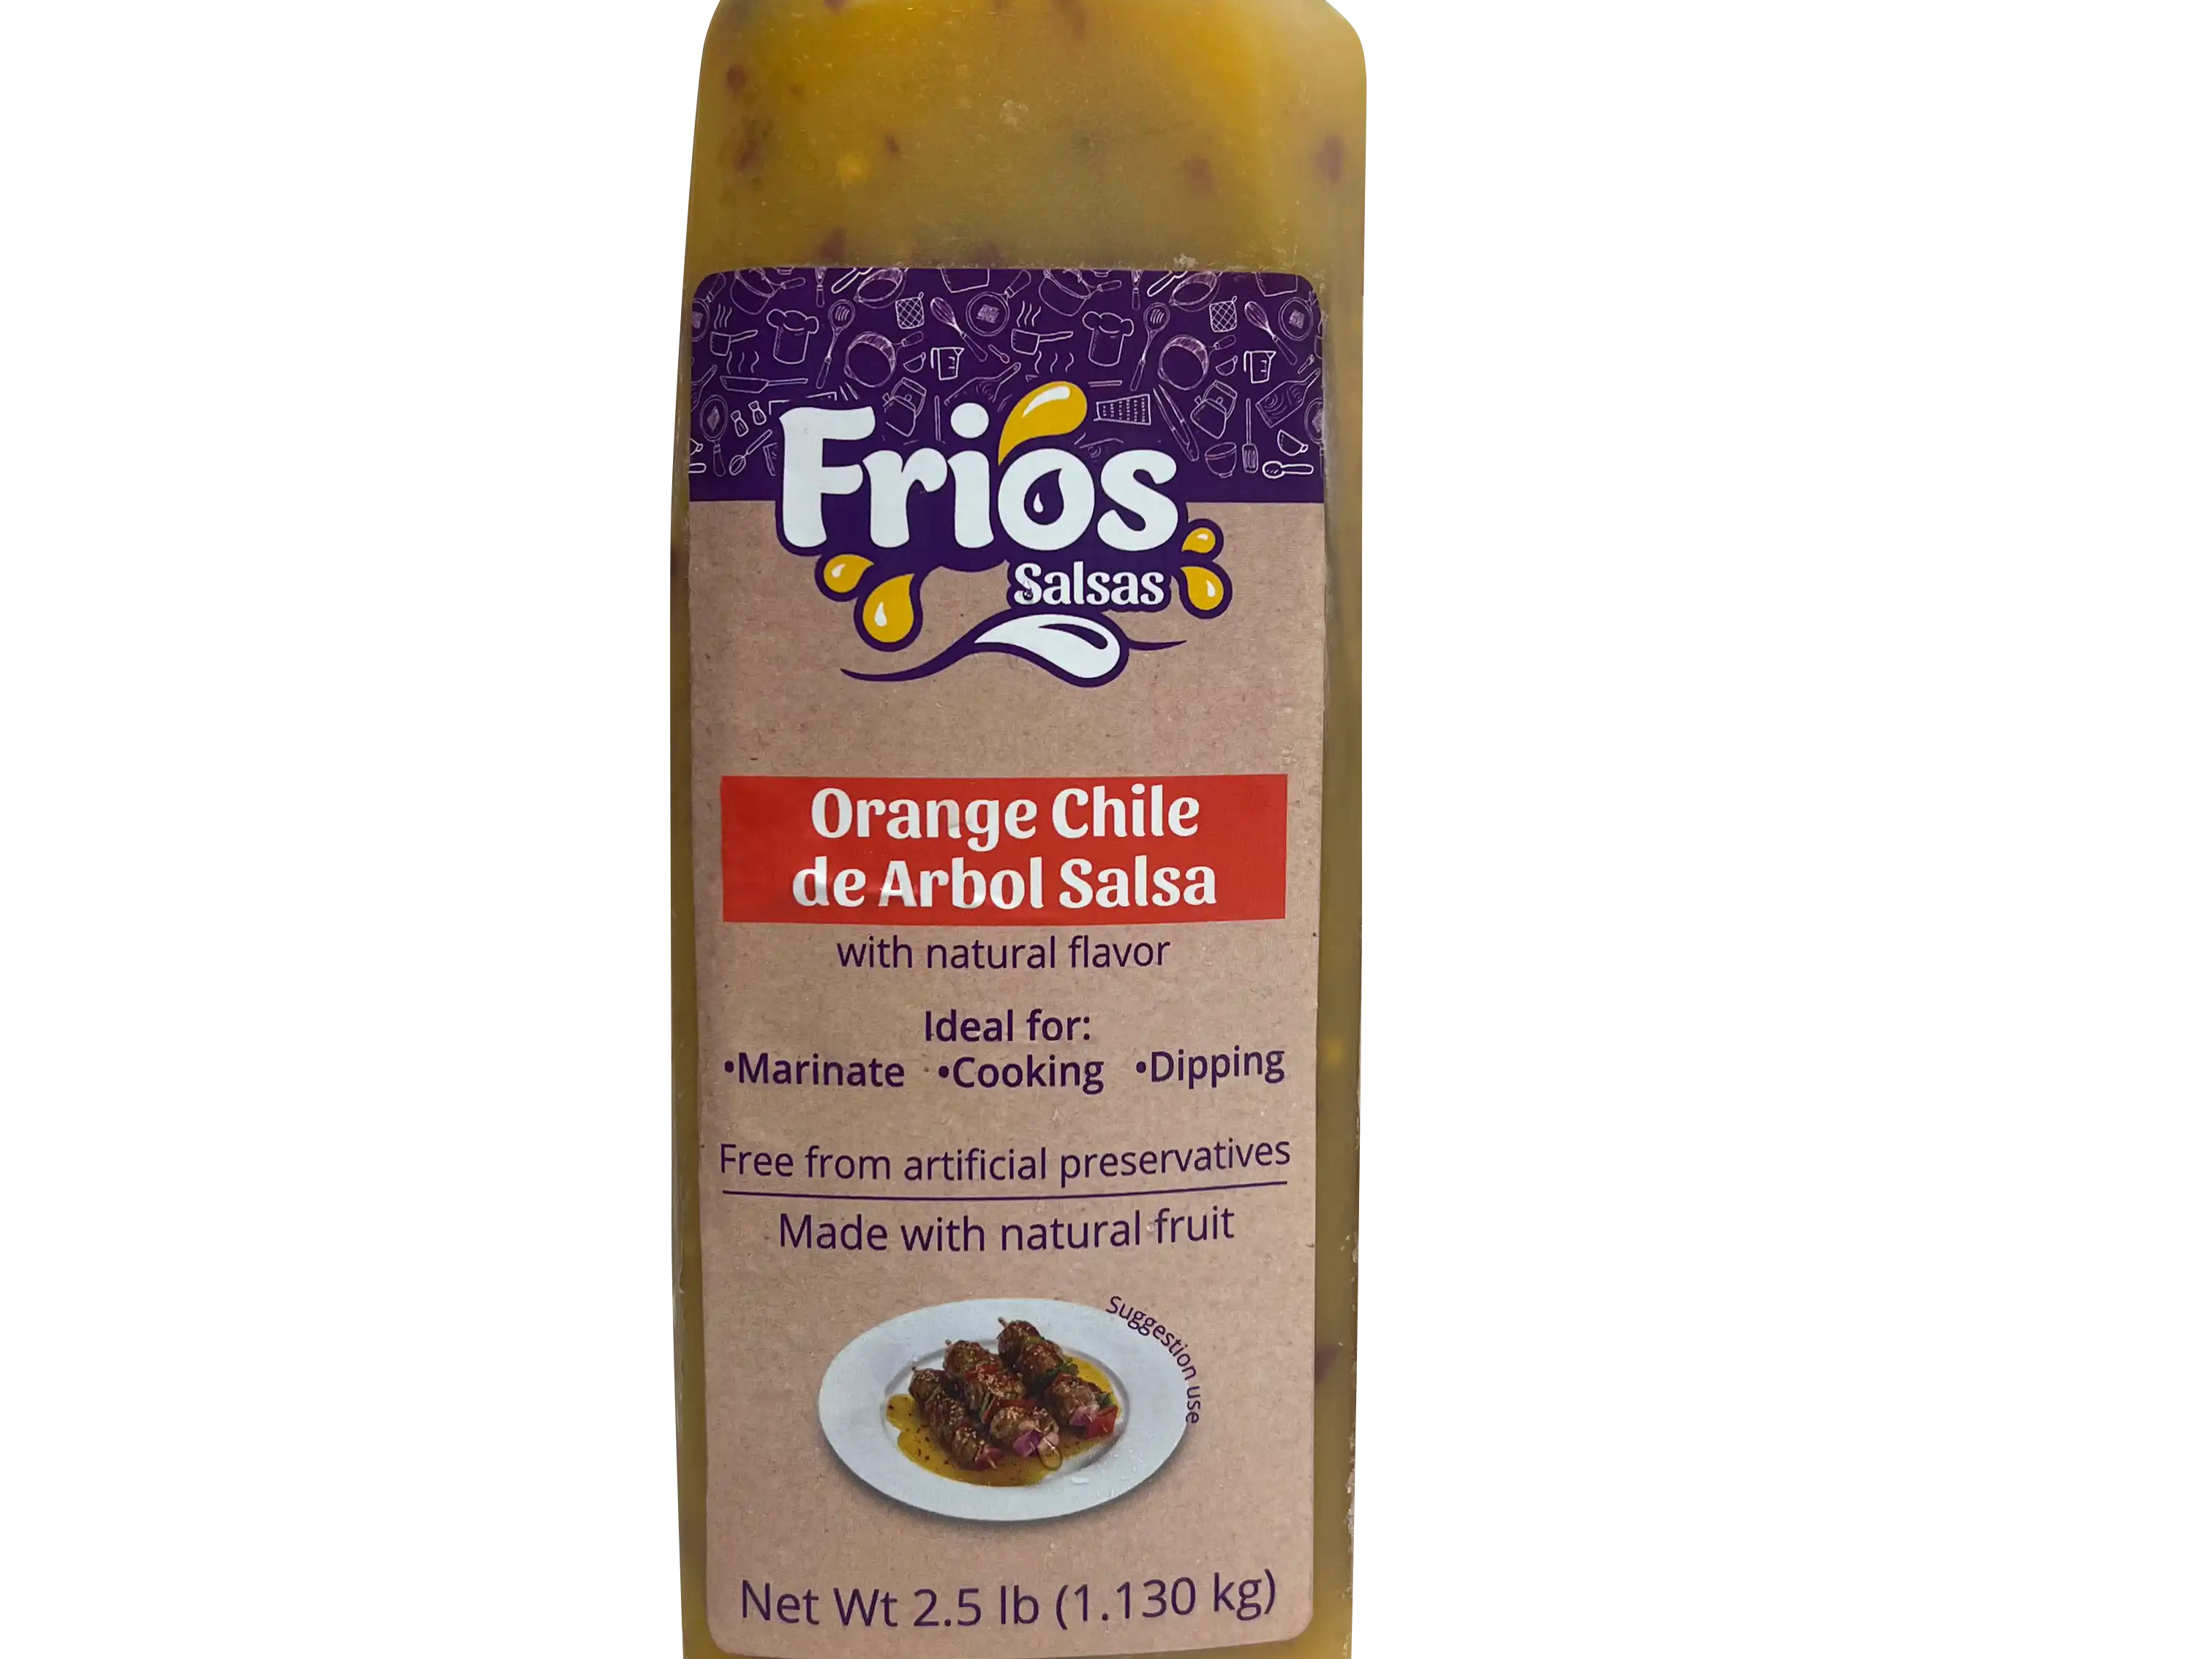 Buy Orange Chile de Arbol Salsa - Spice Up Your Meals with Friendly Fruits' Zesty Salsa